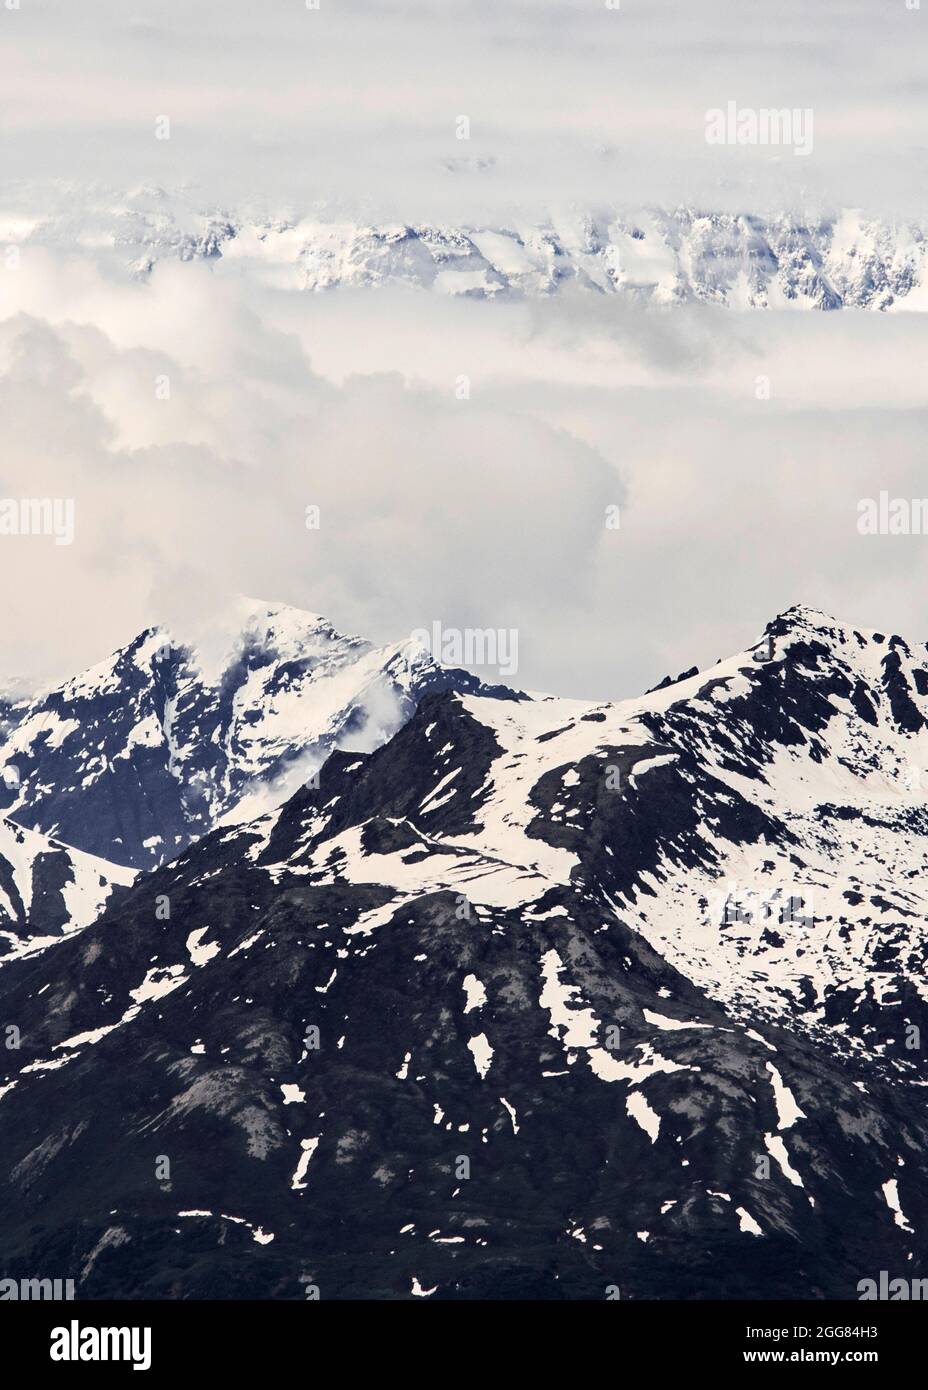 USA, Alaska, Clouds above snowy mountains Stock Photo